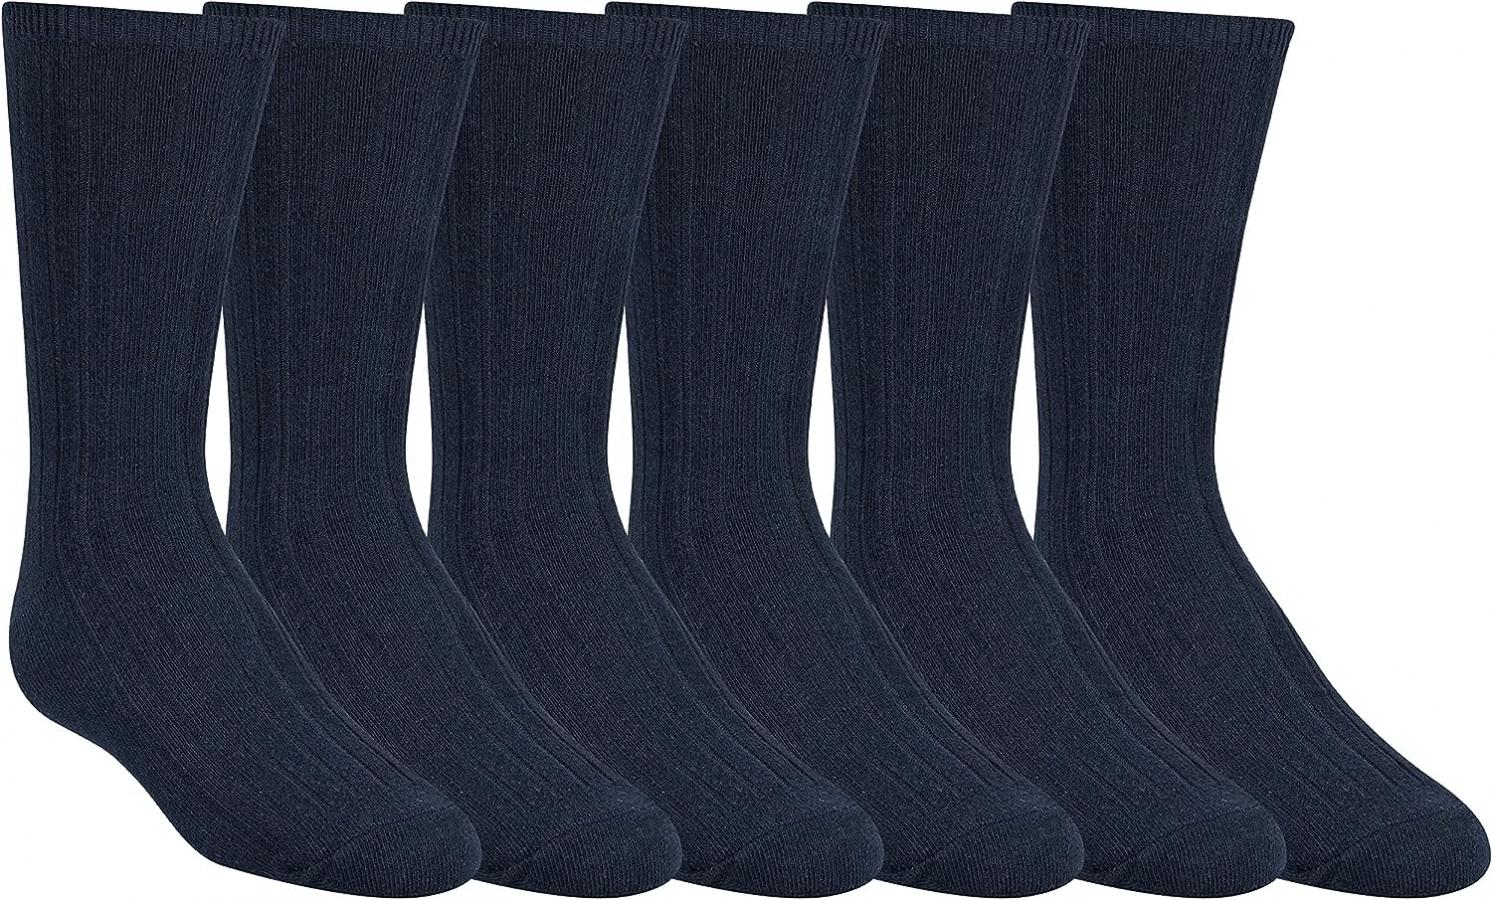 Stride Rite Boys Soft Cotton Solid Dress, Uniform Crew Socks Black, Navy and Assorted Sizes 5-11, 12M-11+Y